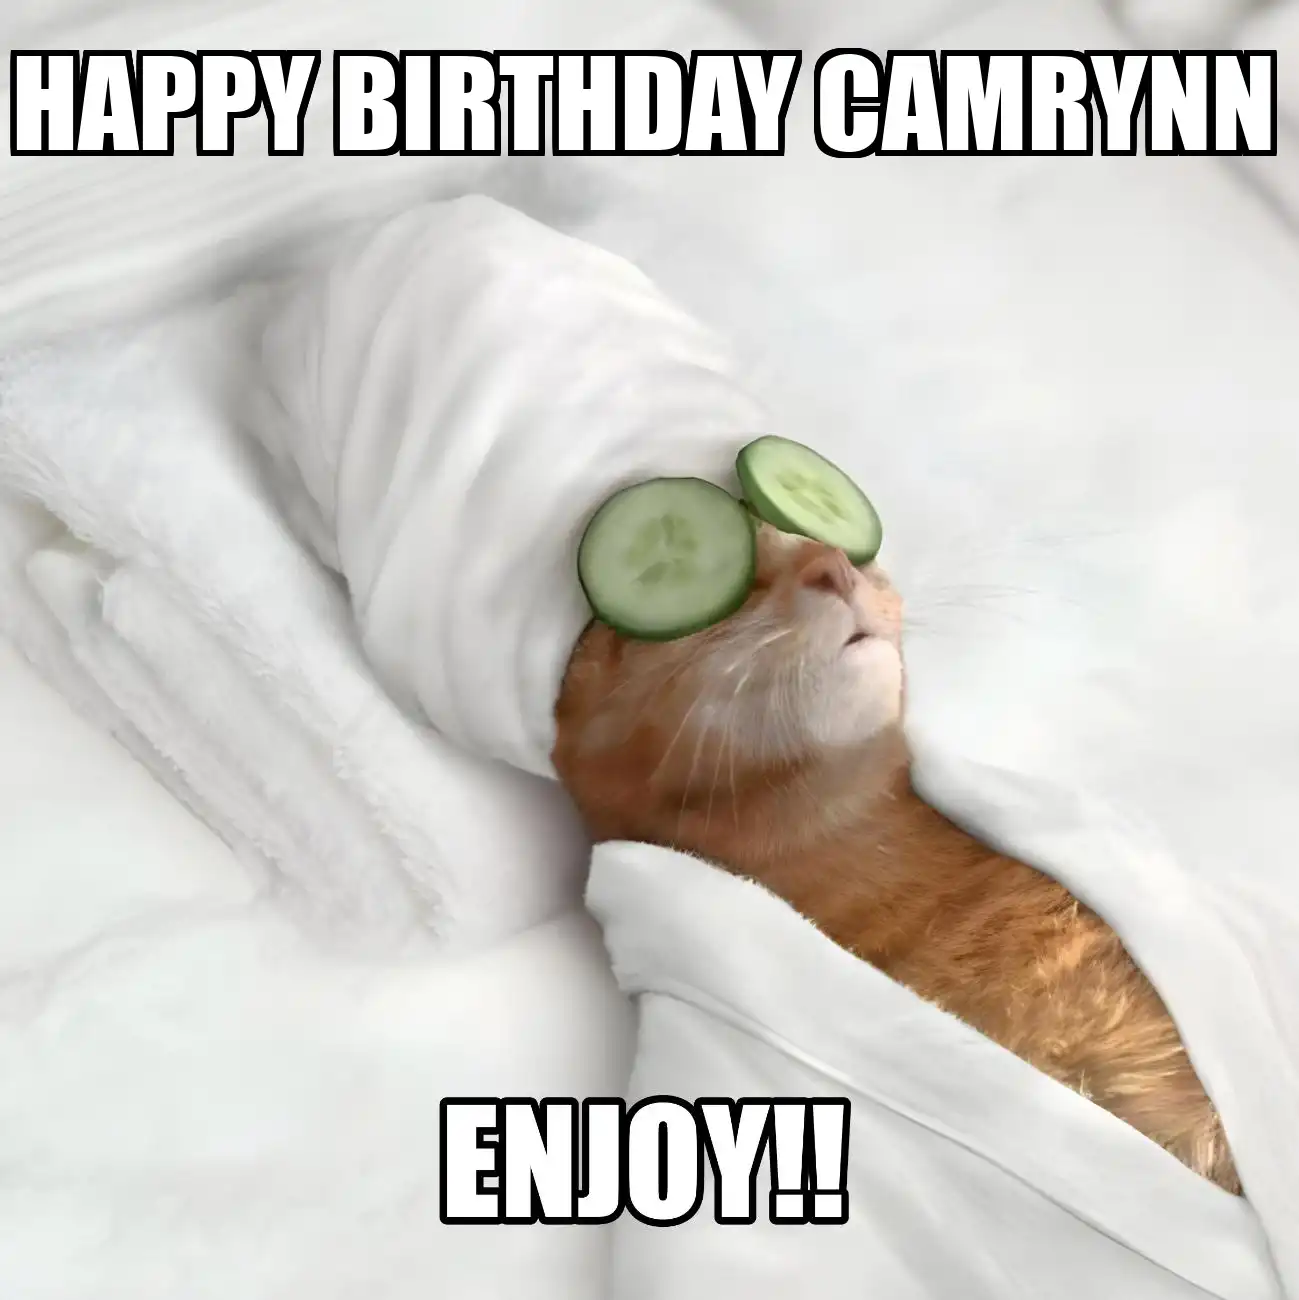 Happy Birthday Camrynn Enjoy Cat Meme